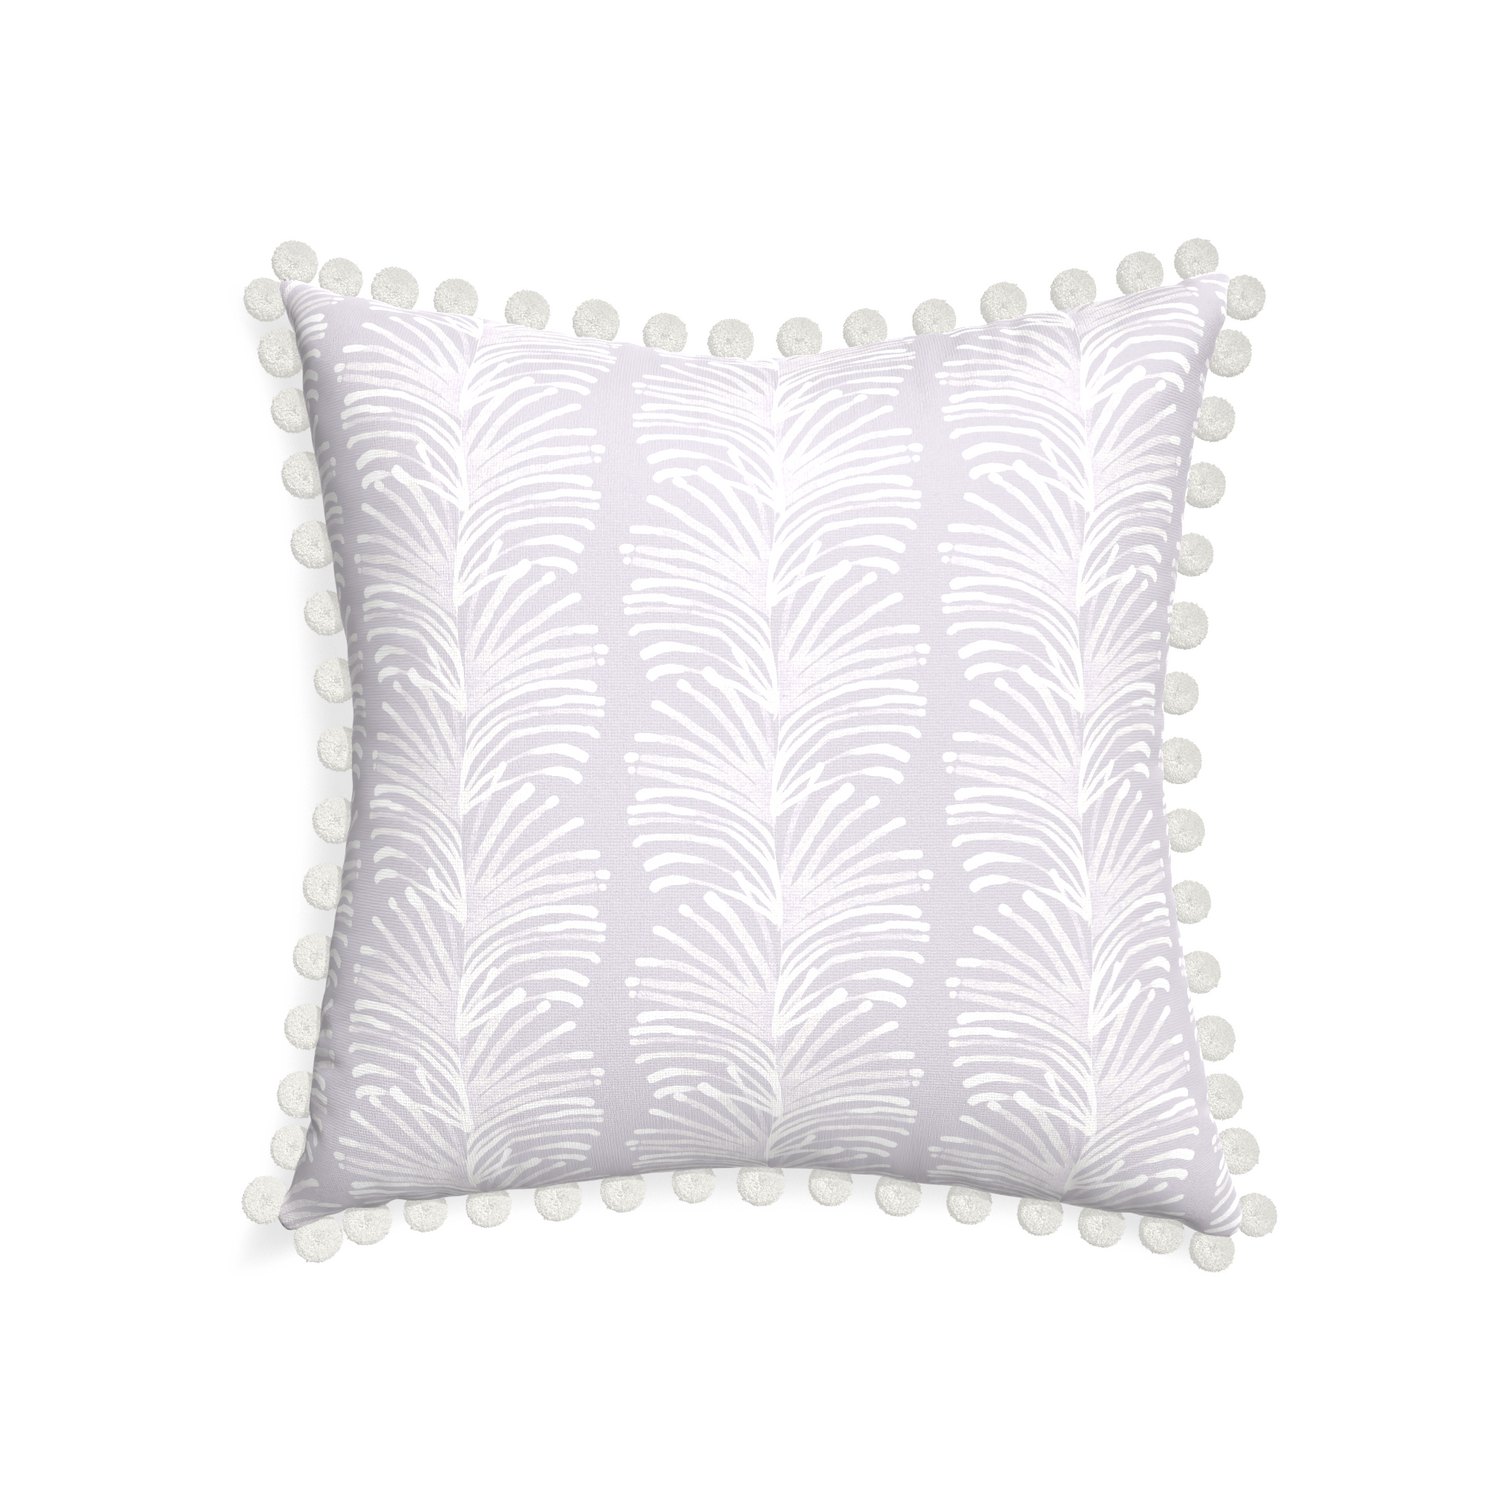 22-square emma lavender custom pillow with snow pom pom on white background